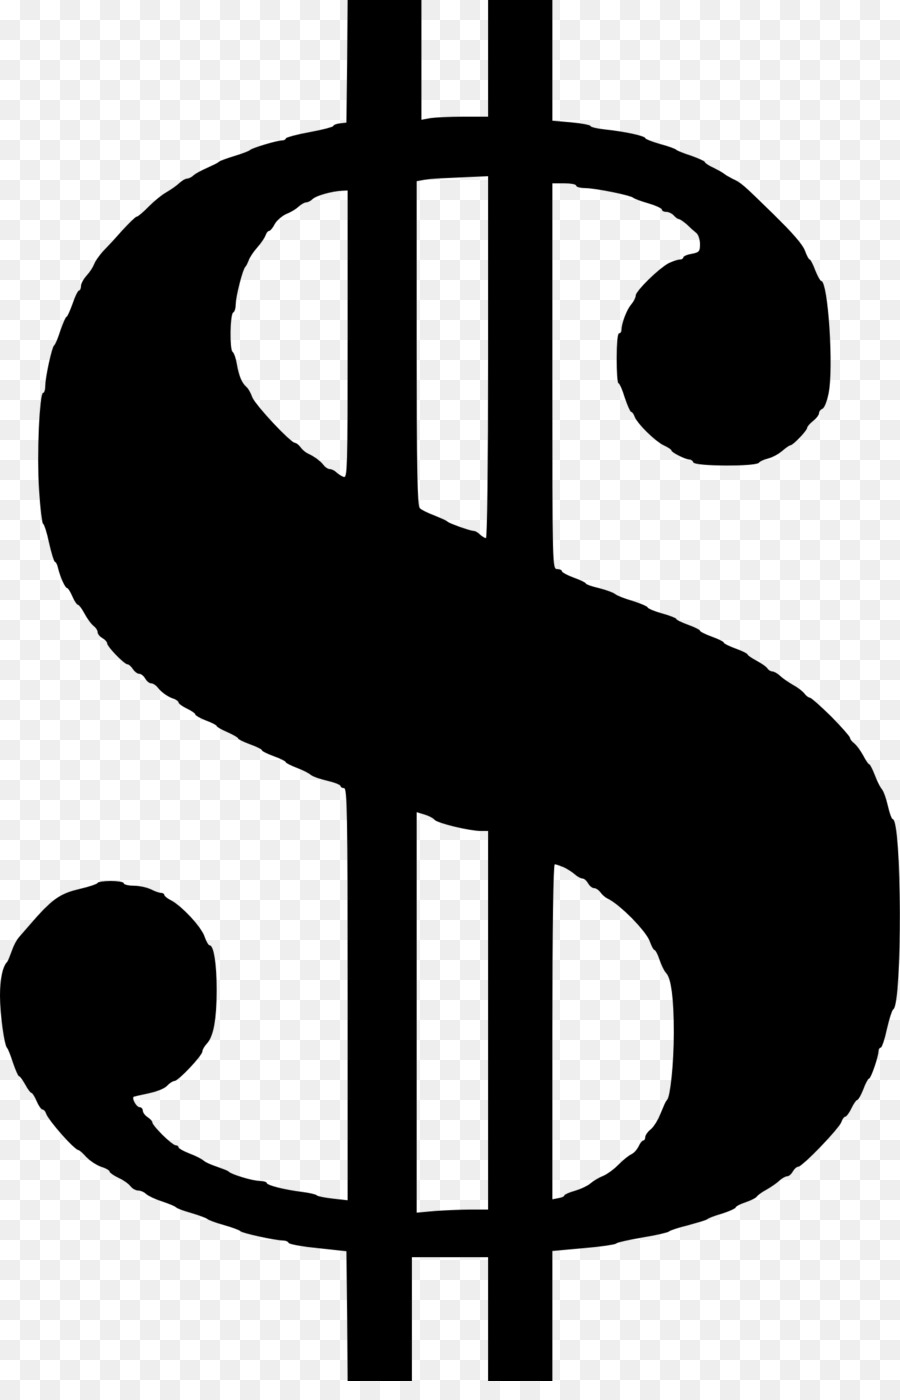 Dollar sign Currency symbol Money Clip art - dollar png download - 1512*2320 - Free Transparent Dollar Sign png Download.